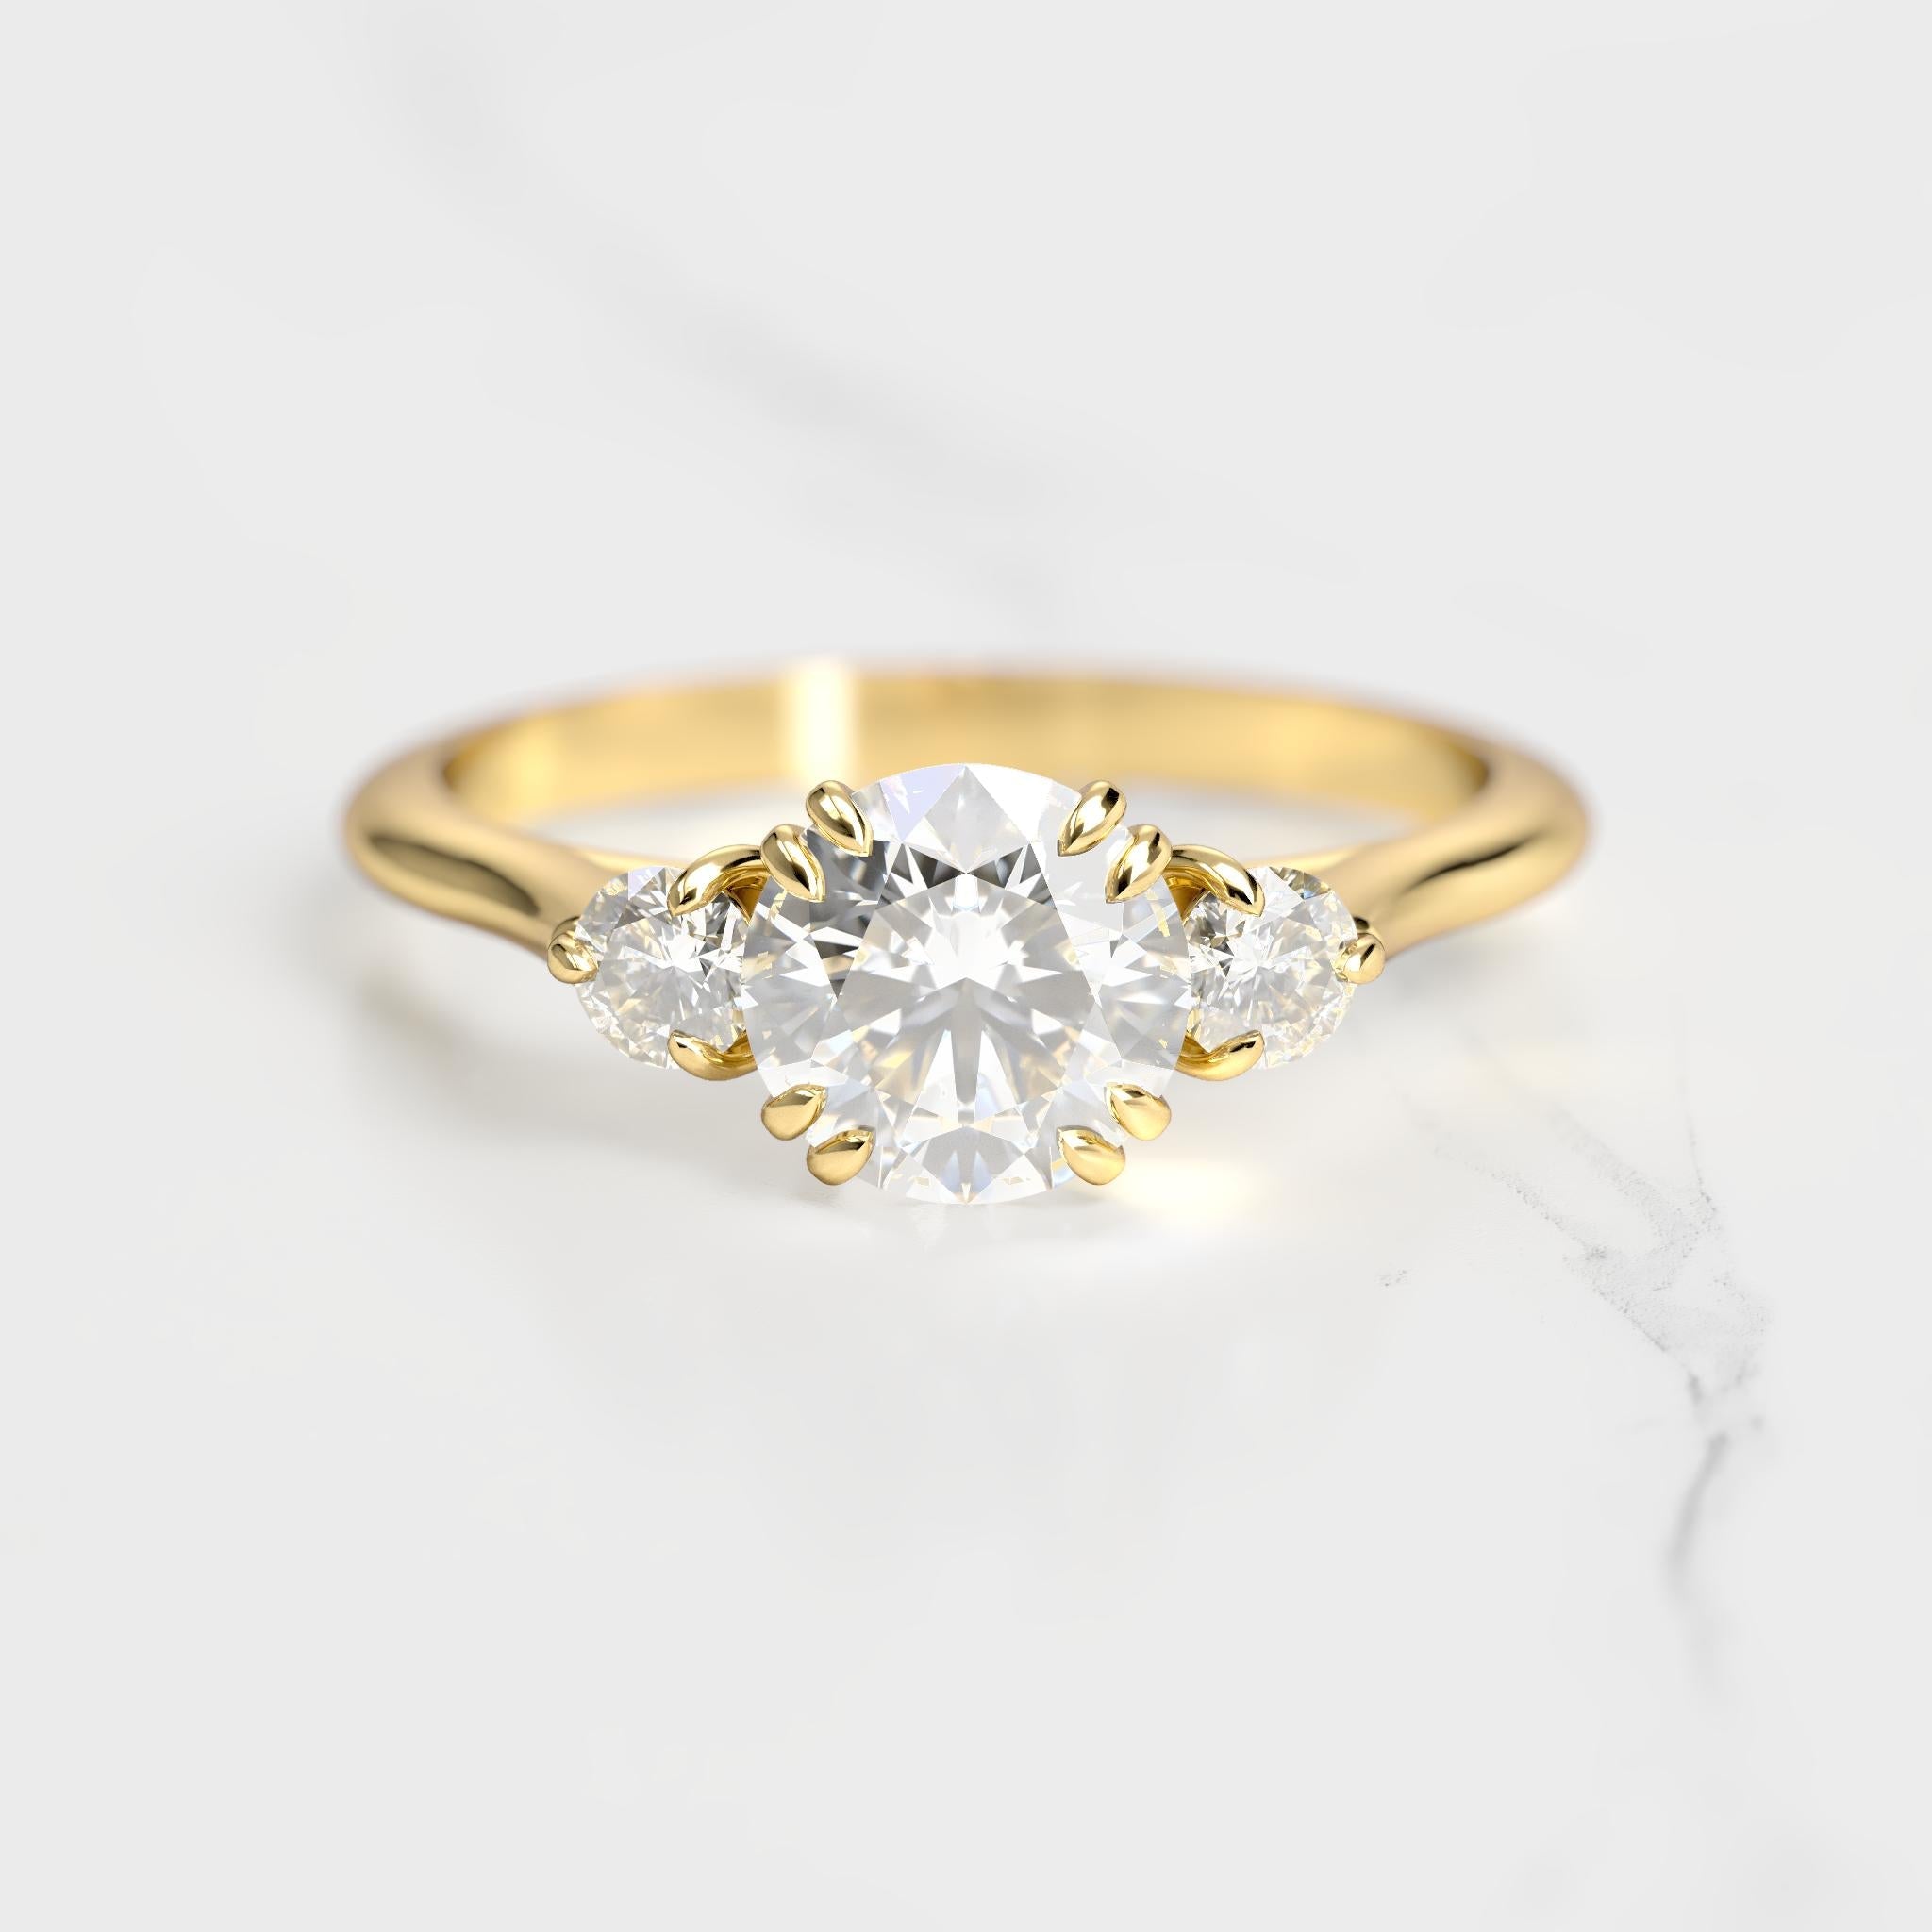 Round Diamond Ring With Accent Stones - 18k rose gold / 0.5ct / lab diamond